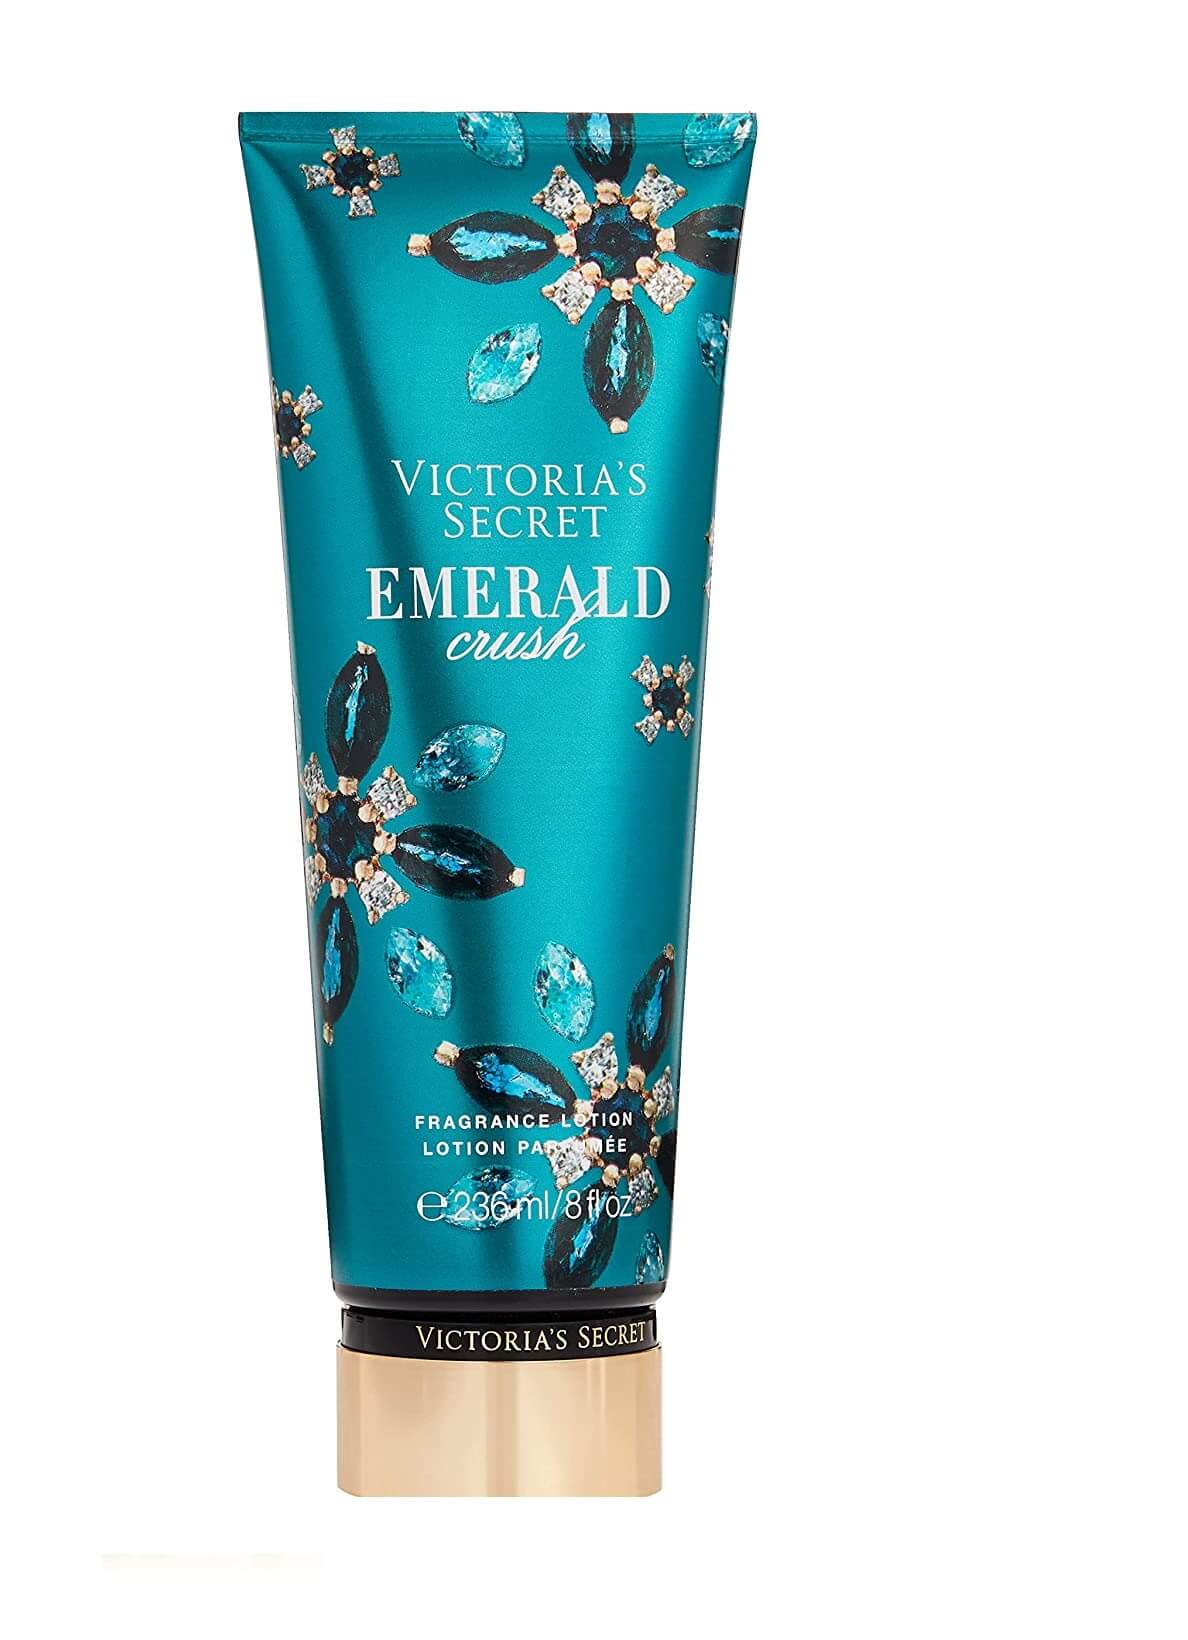 Victoria's Secret Emerald Crush Fragrance Lotion 236ml